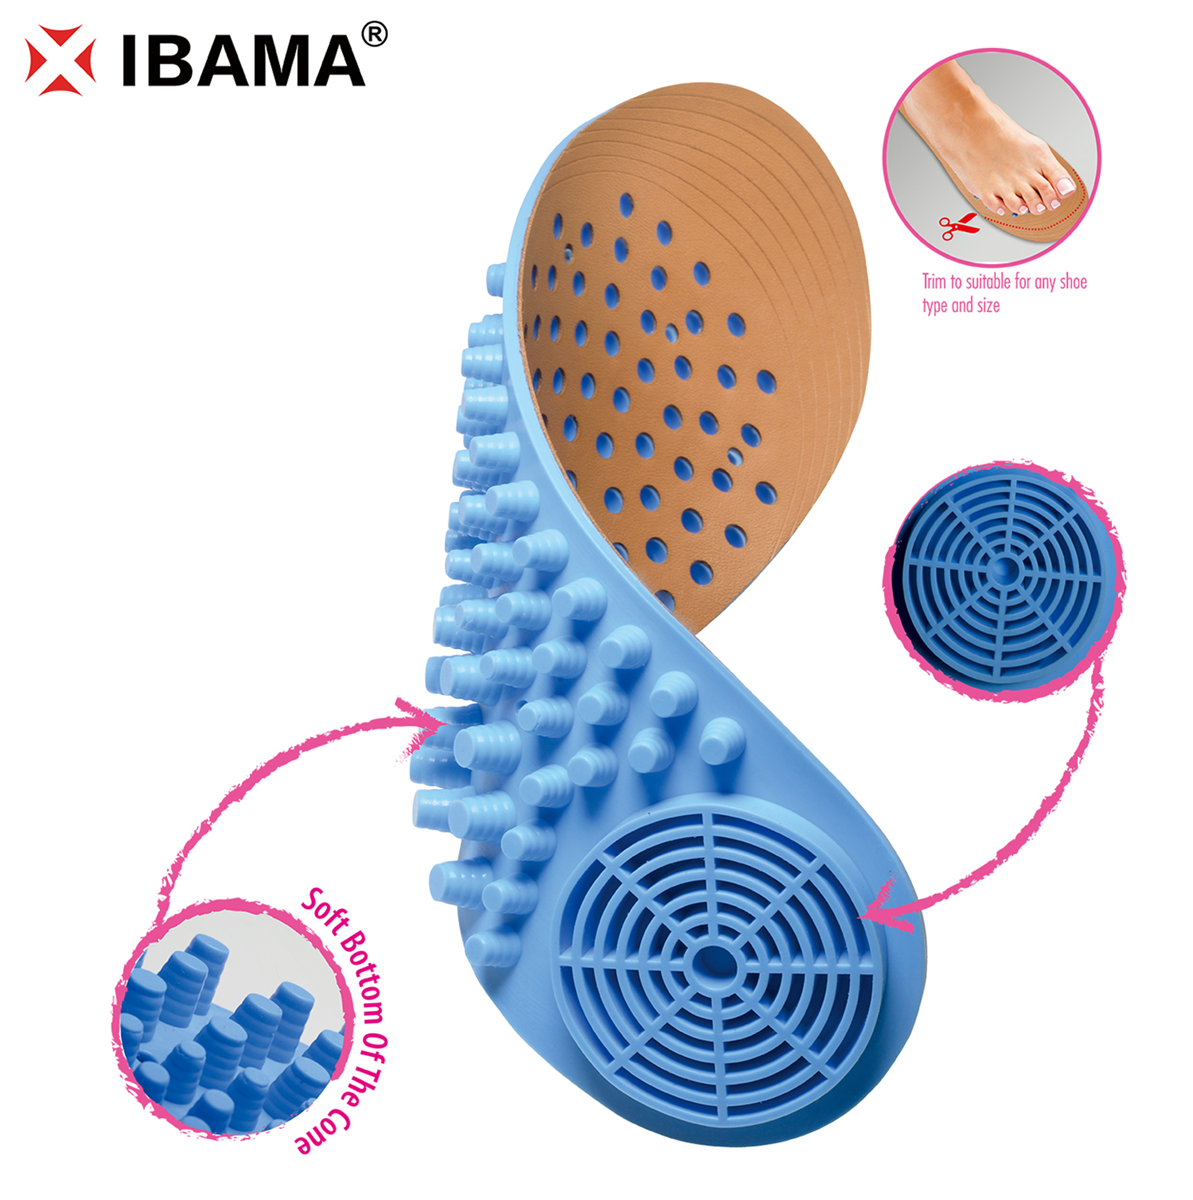 IBAMA Gel Massage Shoe Insoles Foot Pressure Relief Shock Absorbing Superior Comfort and Non Irritating 1 Pair